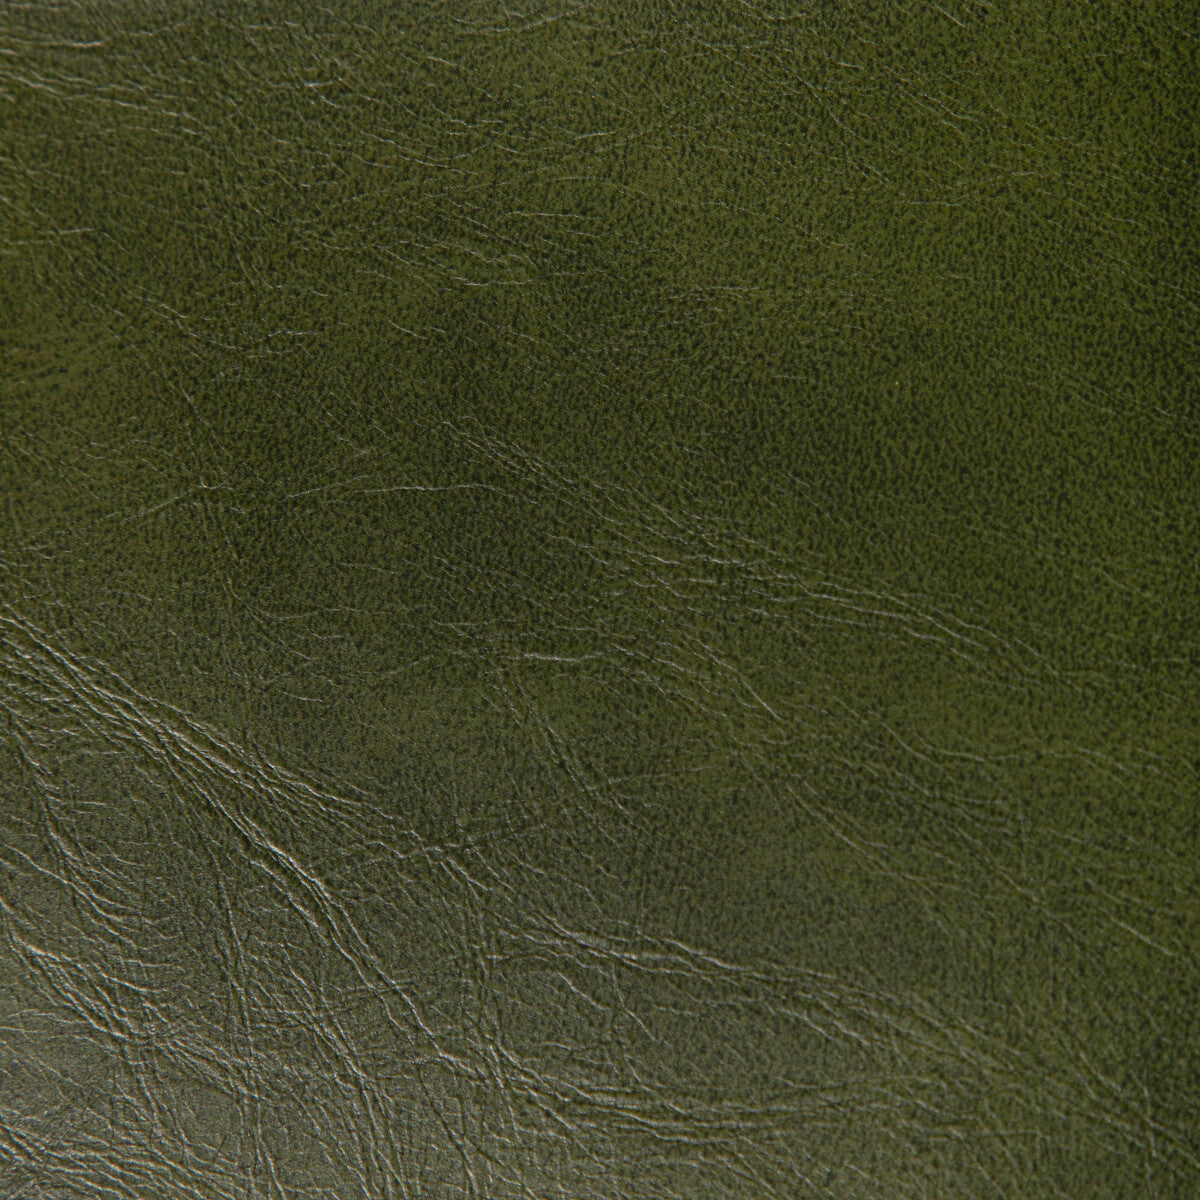 Rambler fabric in verde color - pattern RAMBLER.3.0 - by Kravet Contract